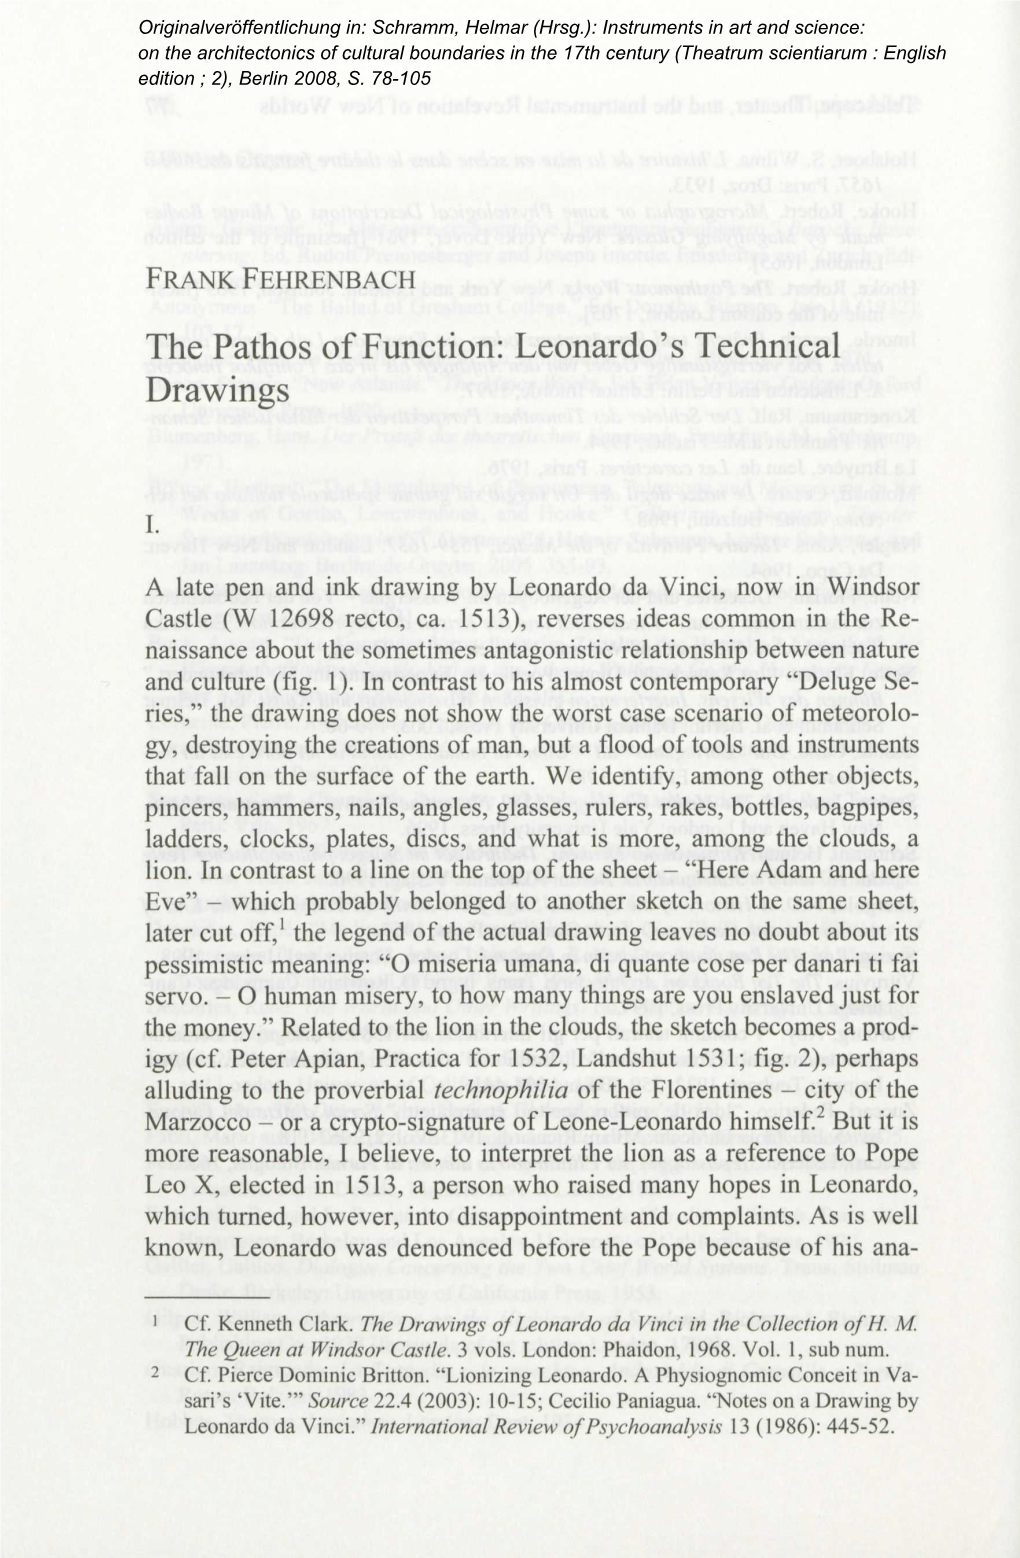 The Pathos of Function: Leonardo's Technical Drawings